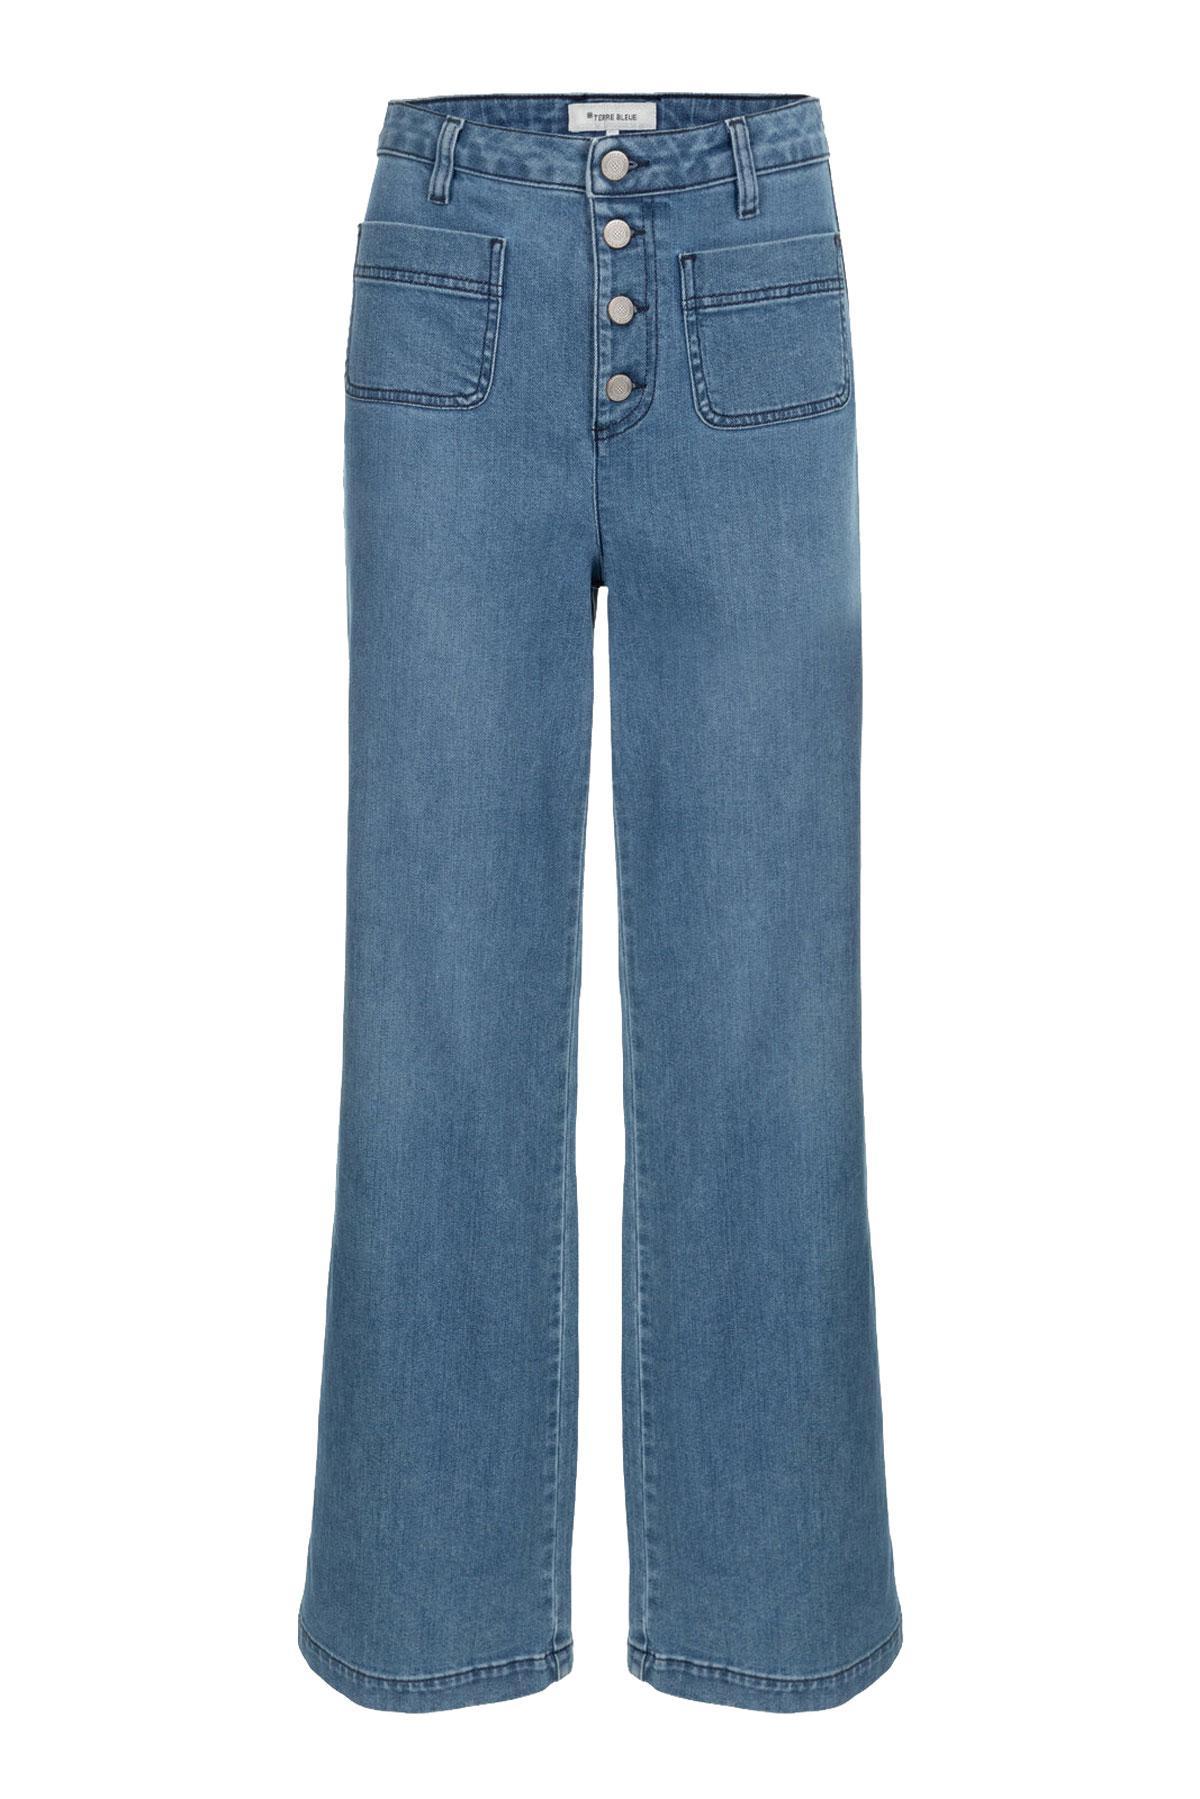 Jeans, Terre Bleue, 149,90 euros, terrebleue.com